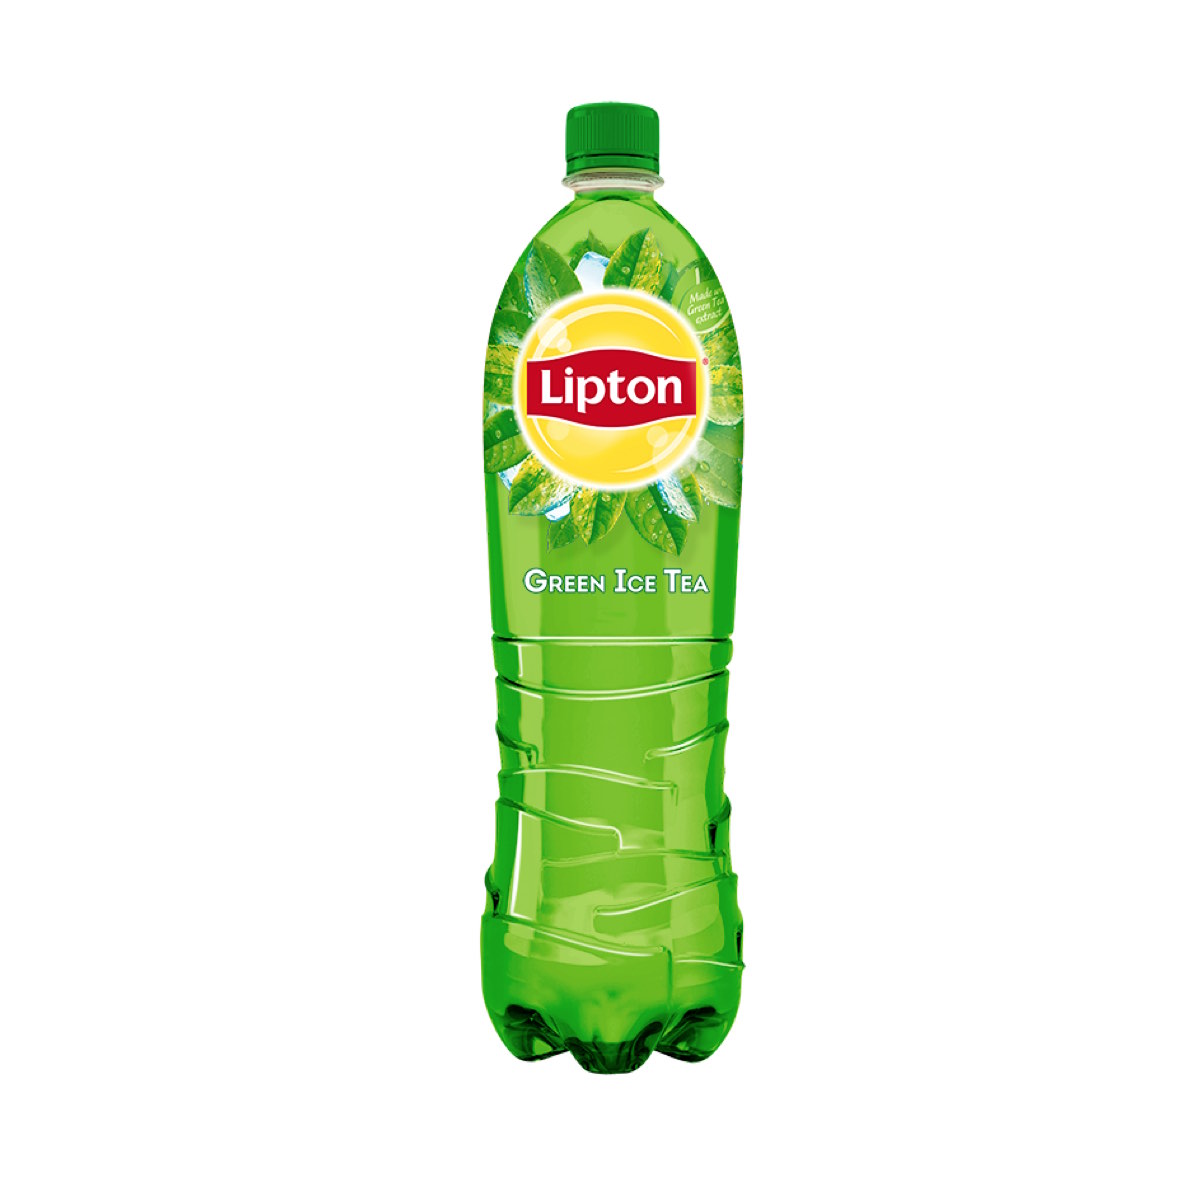 Бутылка зеленого липтона. Липтон зеленый чай 0.5. Липтон зеленый чай 1.5. Чай Липтон зеленый чай 0,5. Липтон айс Теа 1,5.